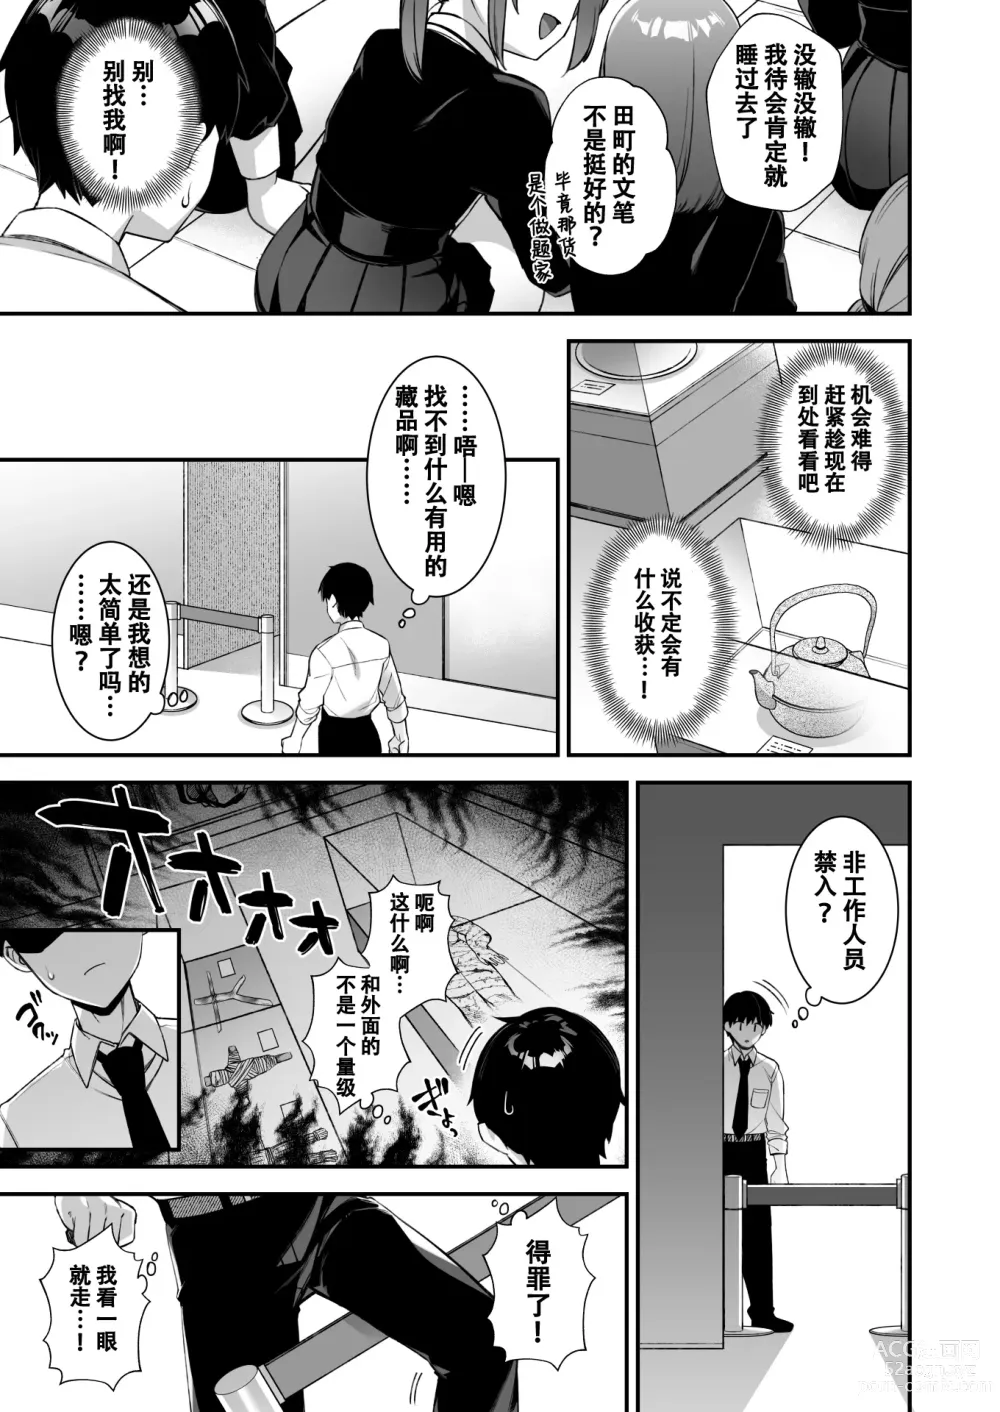 Page 12 of manga Hypnosis 3 (uncensored)